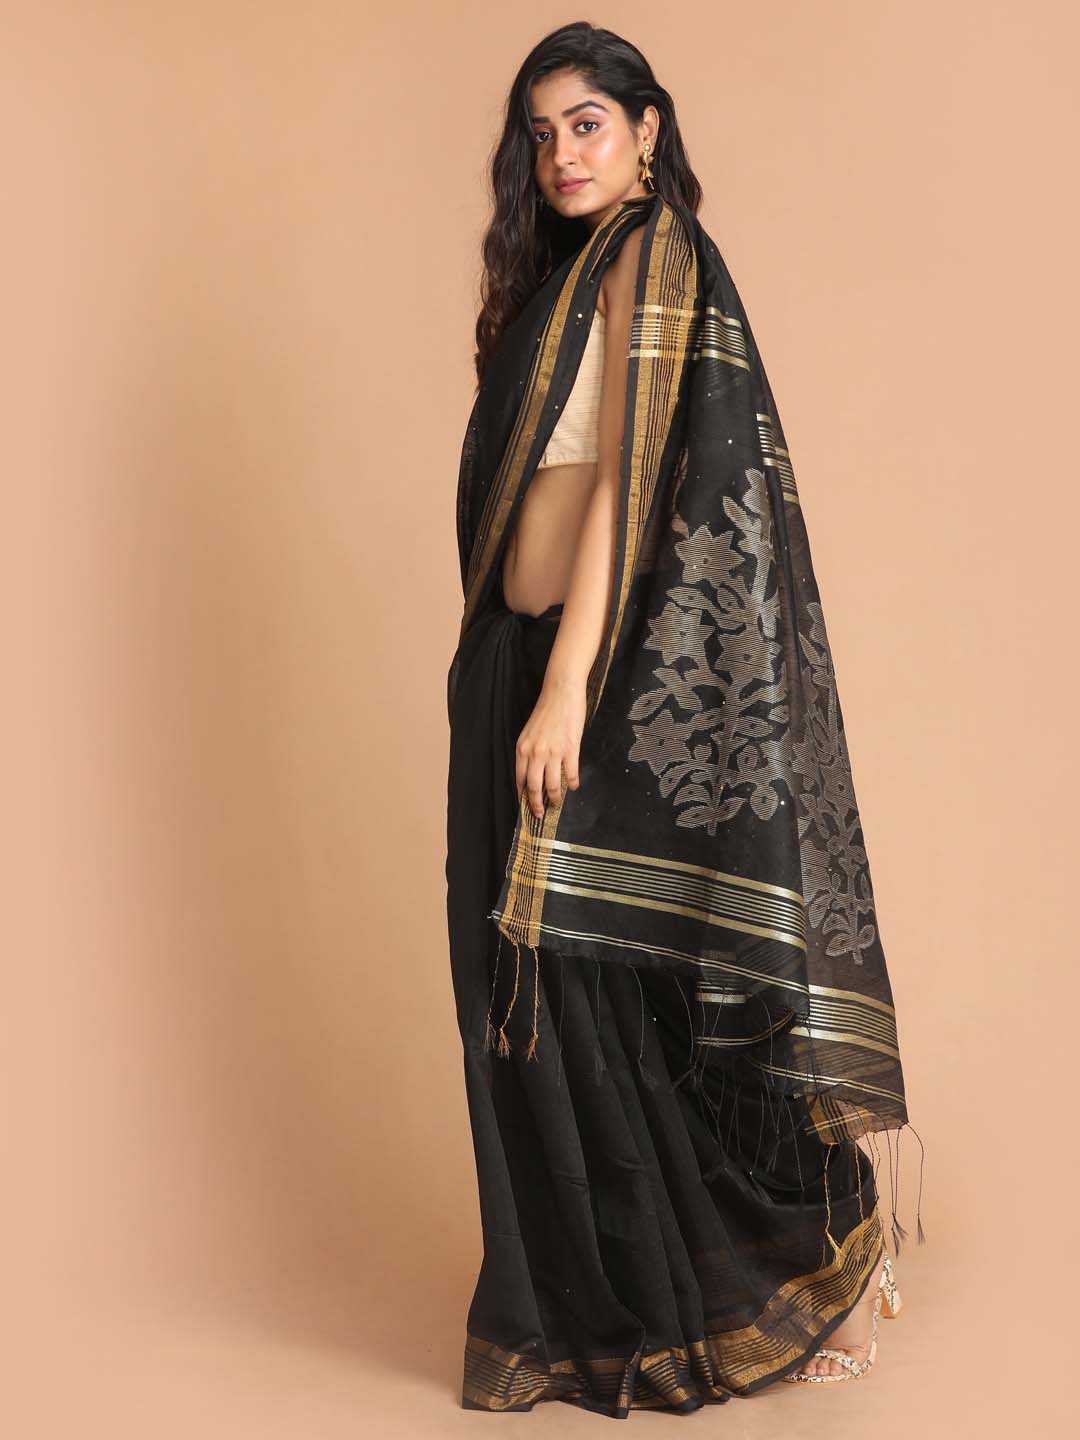 Indethnic Black Bengal Handloom Cotton Blend Party Saree - View 2